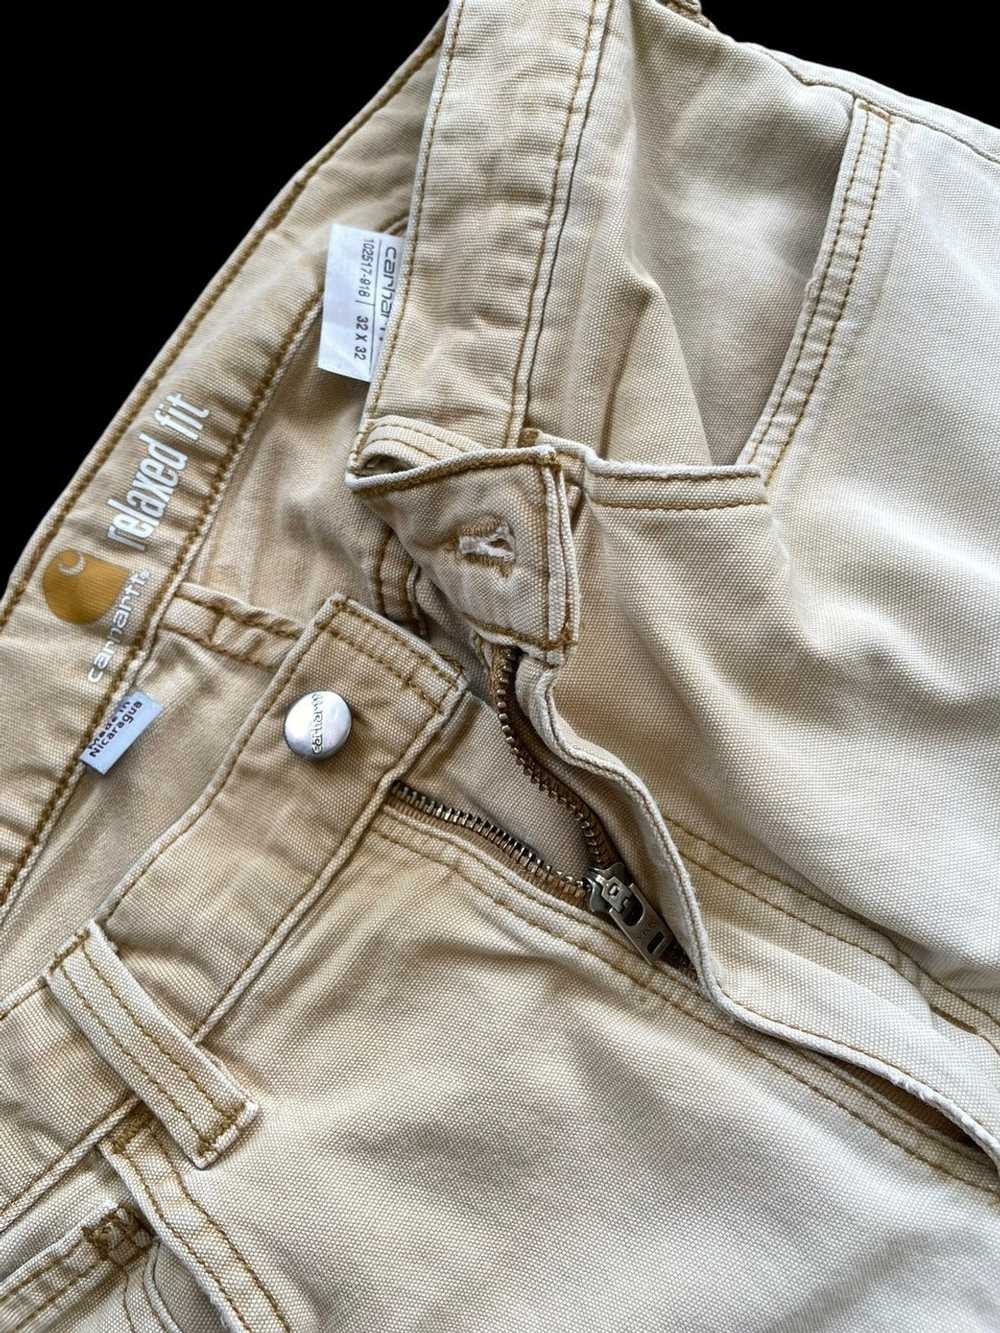 Carhartt Sun faded carhartt work pants: size 32/32 - image 7